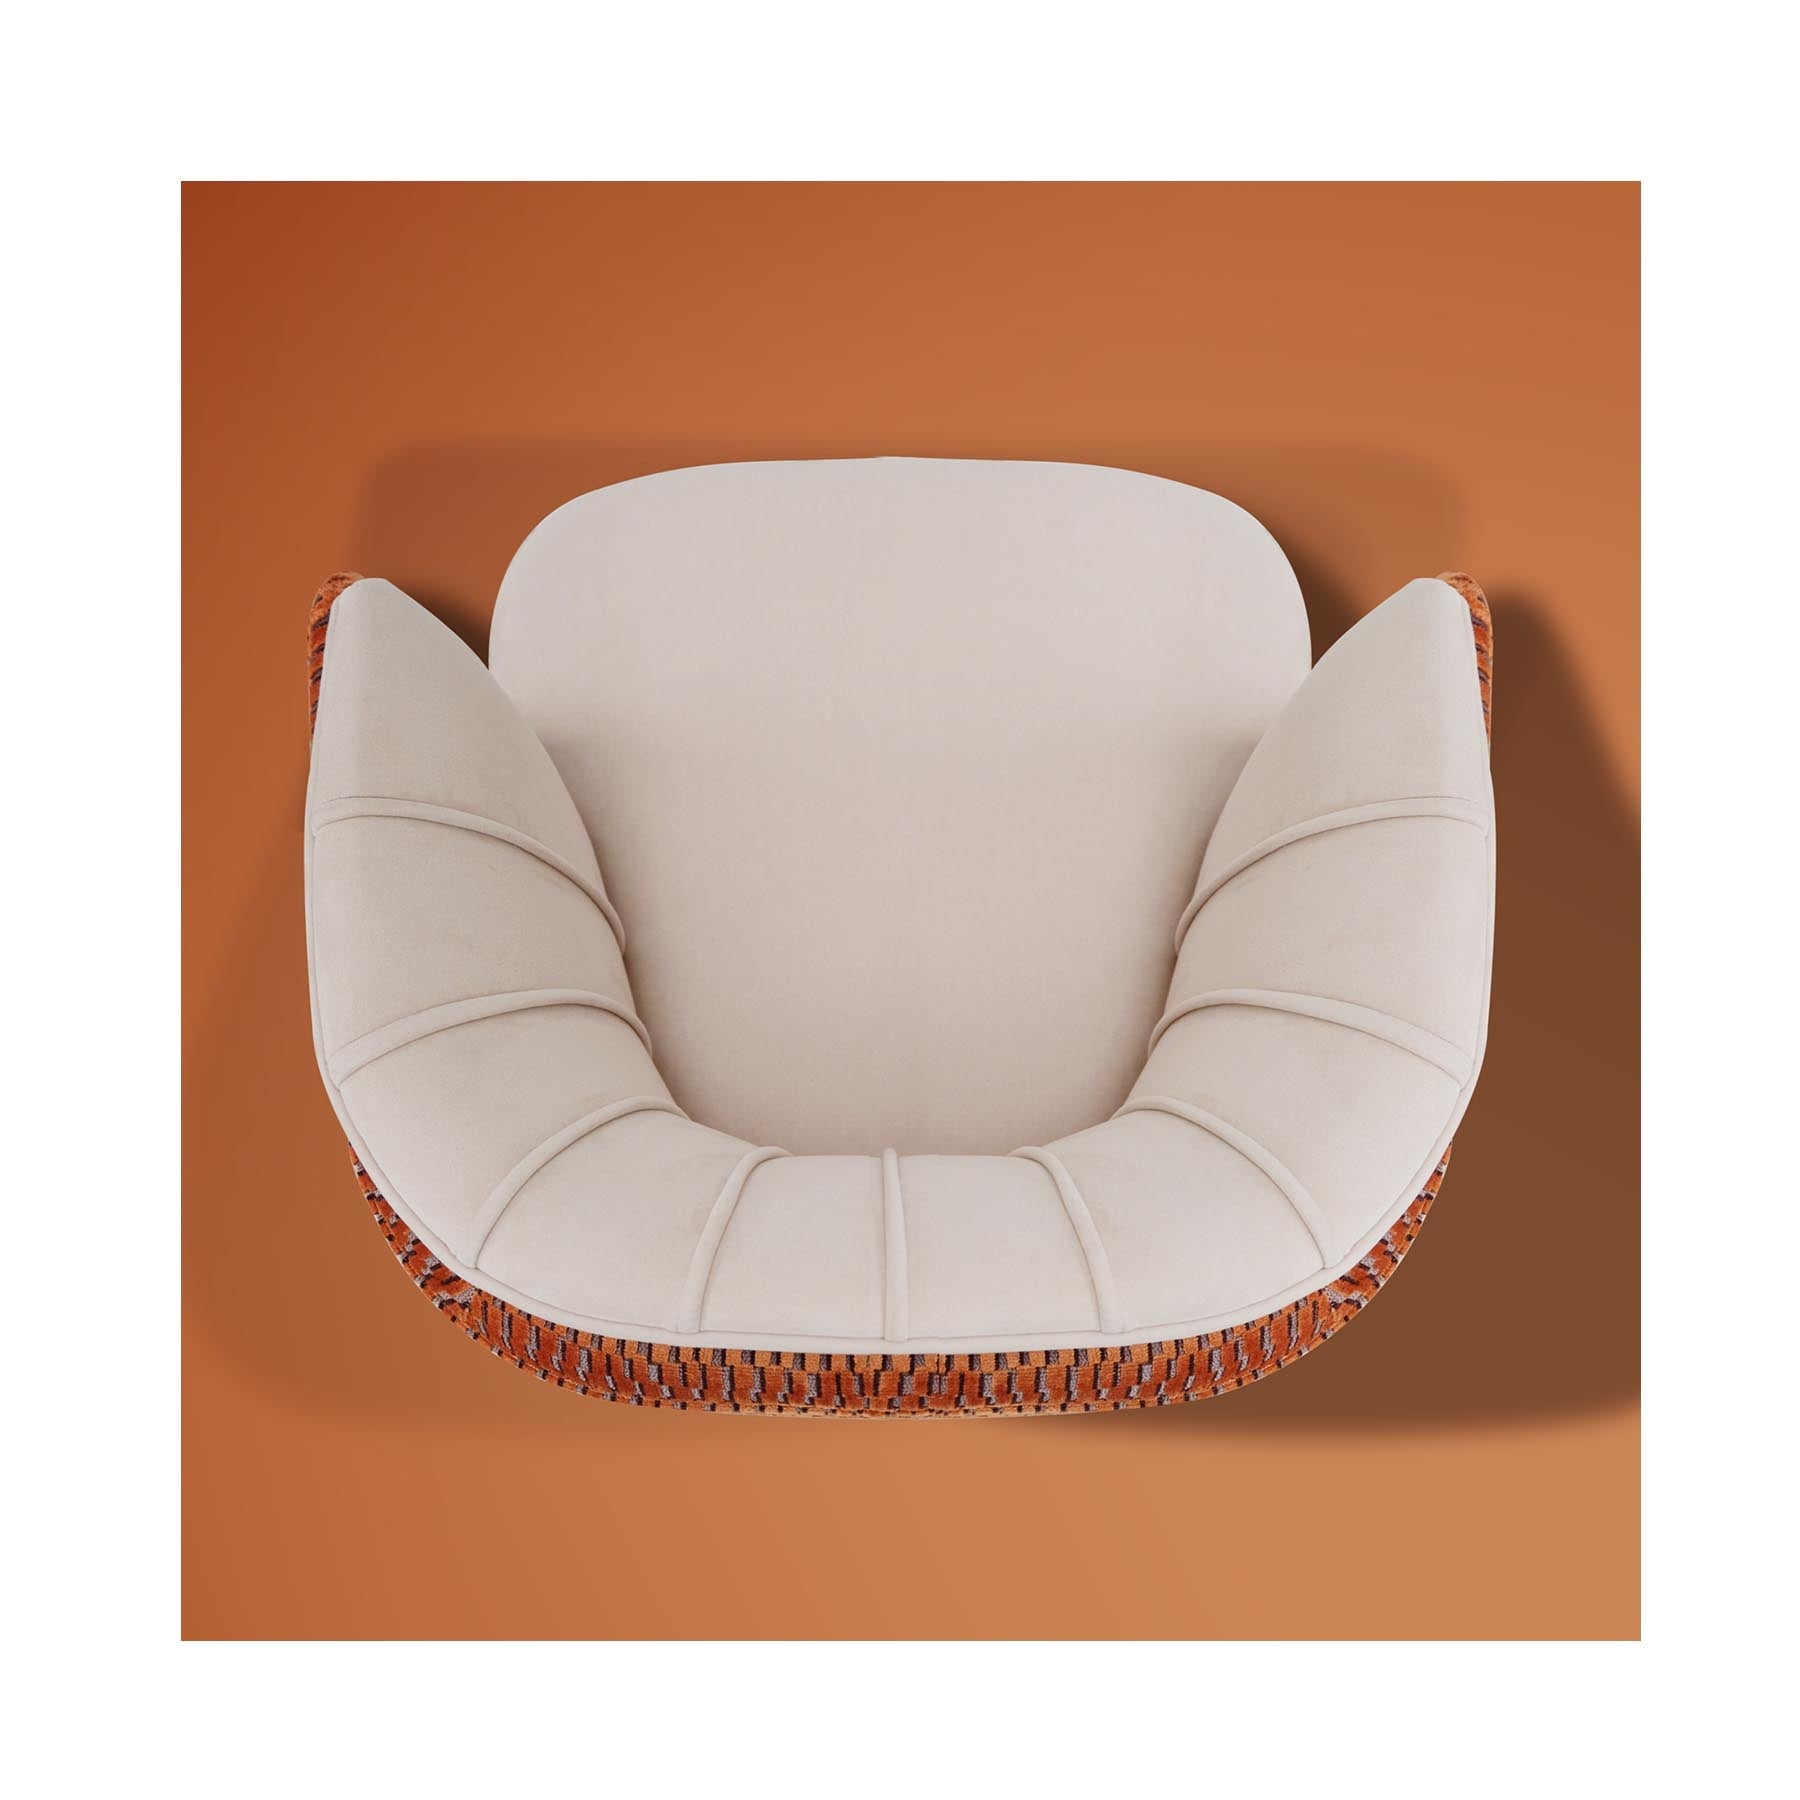 ANITA - CHAIR | Modern Furniture + Decor